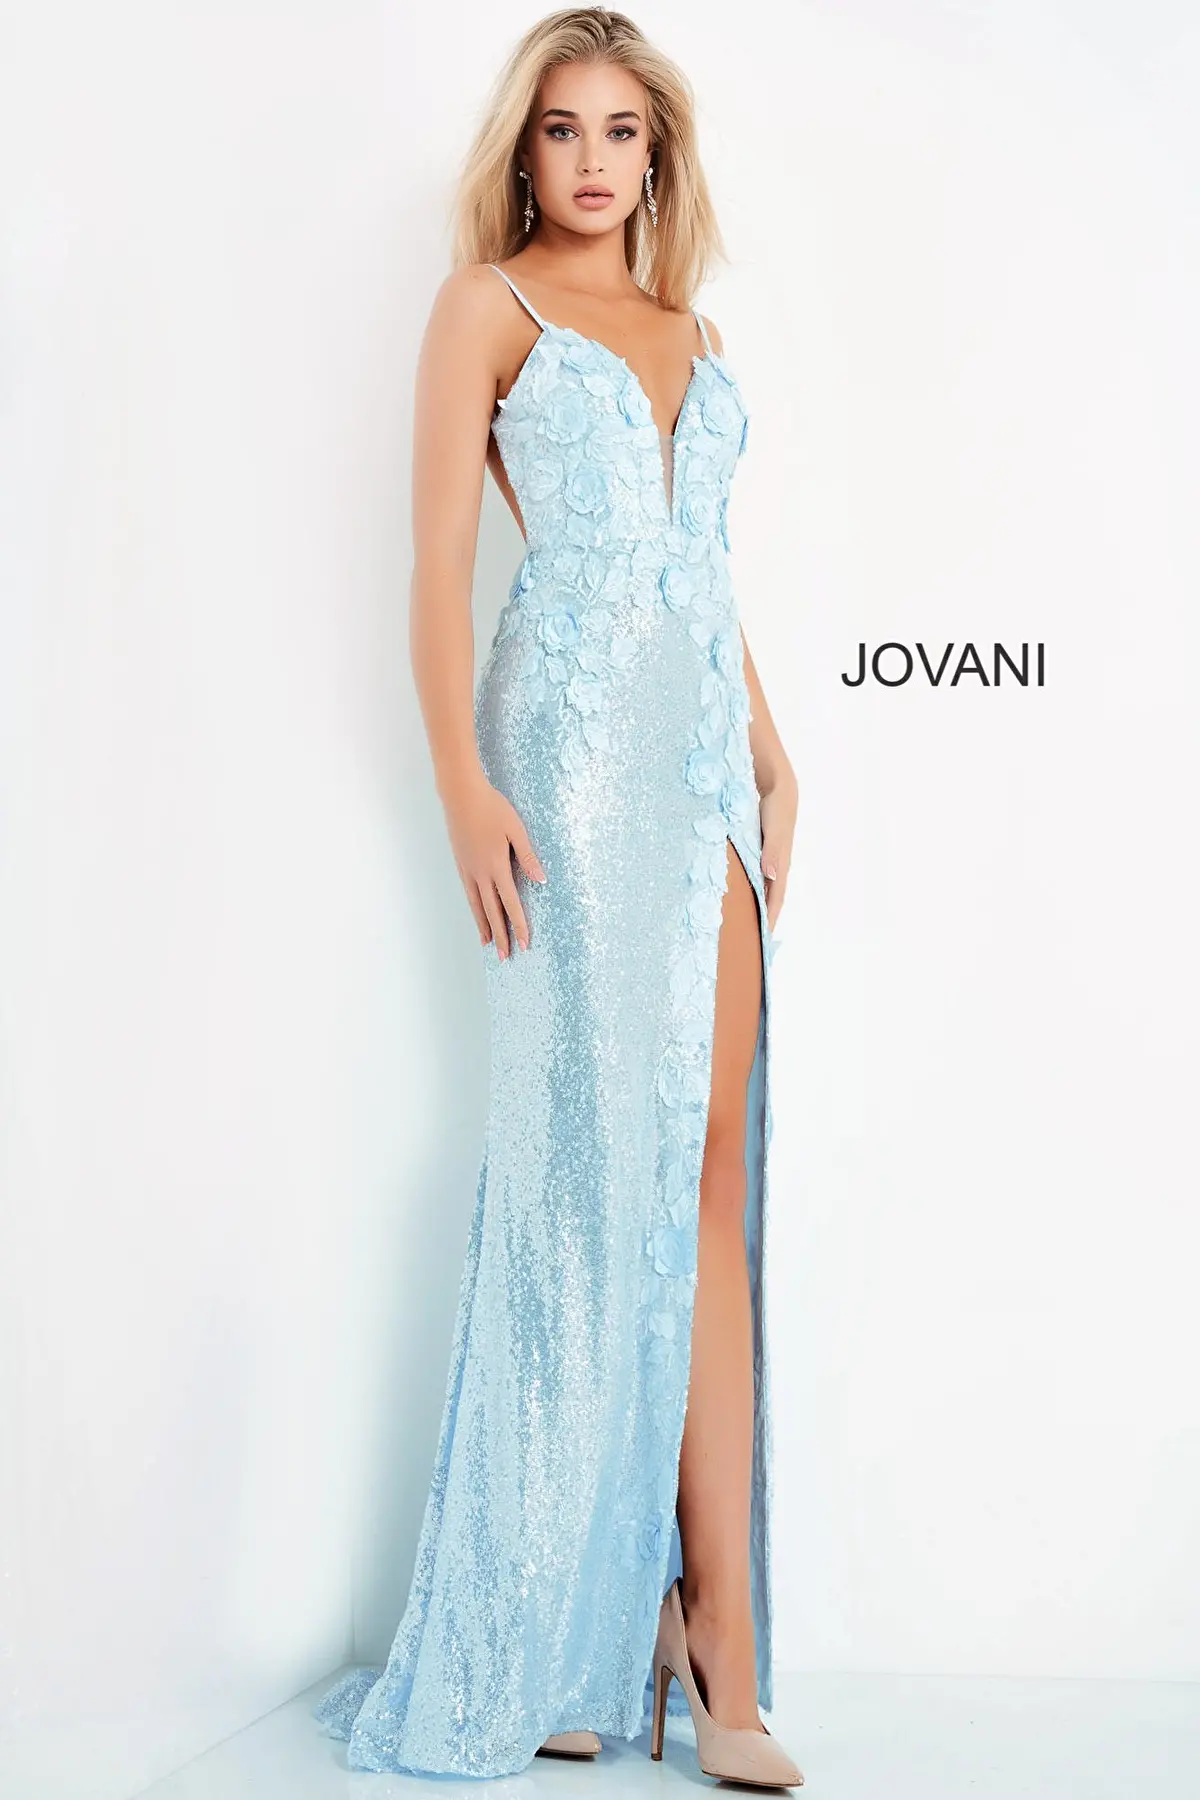 Jovani Dress 1012 | White Floral Appliques High Slit Dress